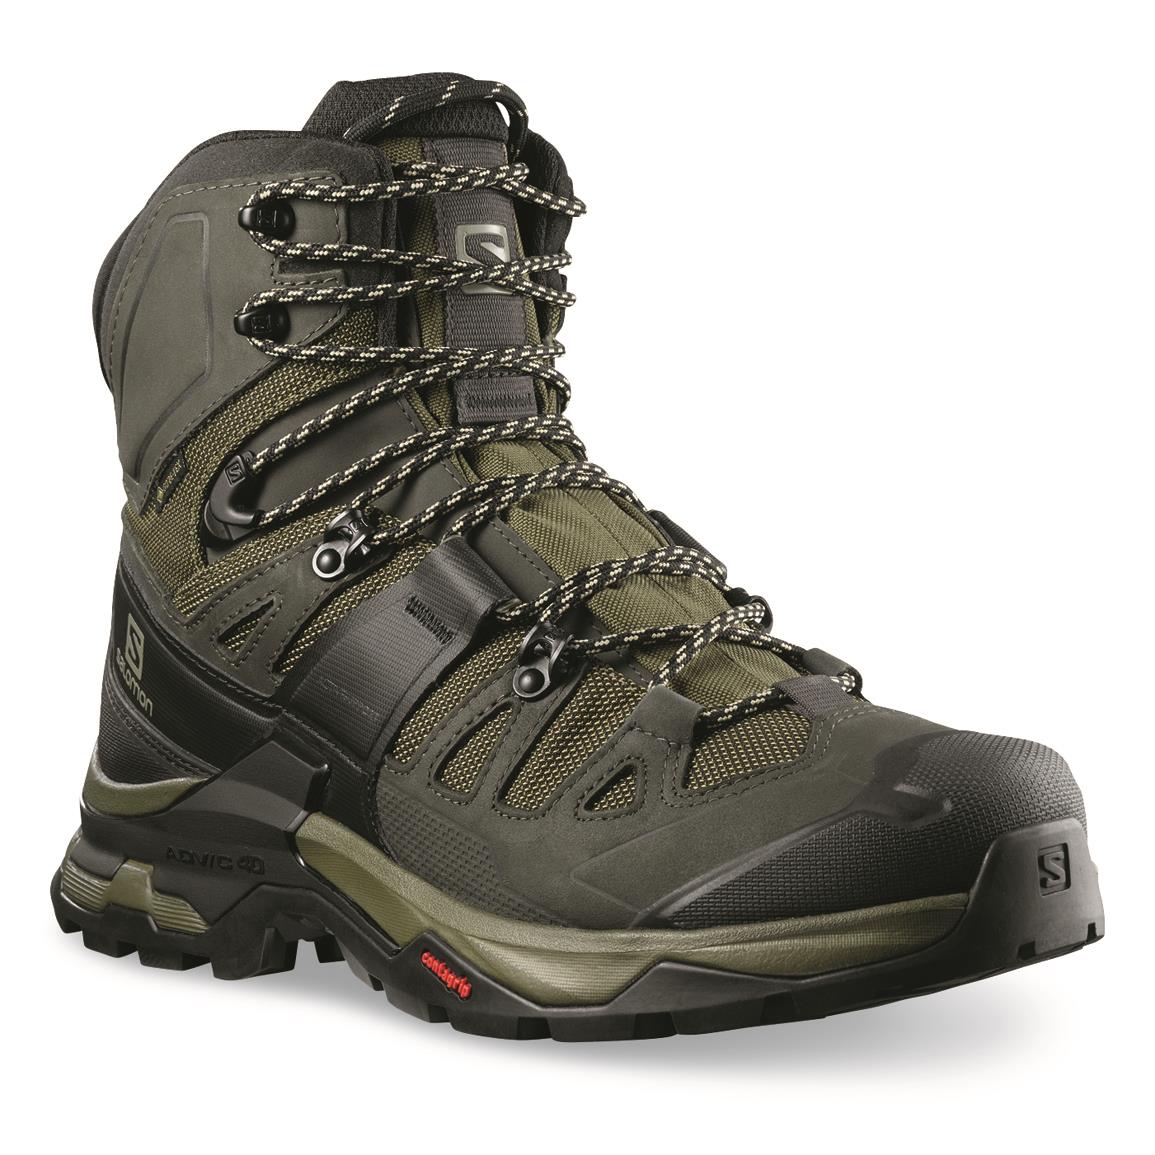 The best trekking boots for your Elbrus trip